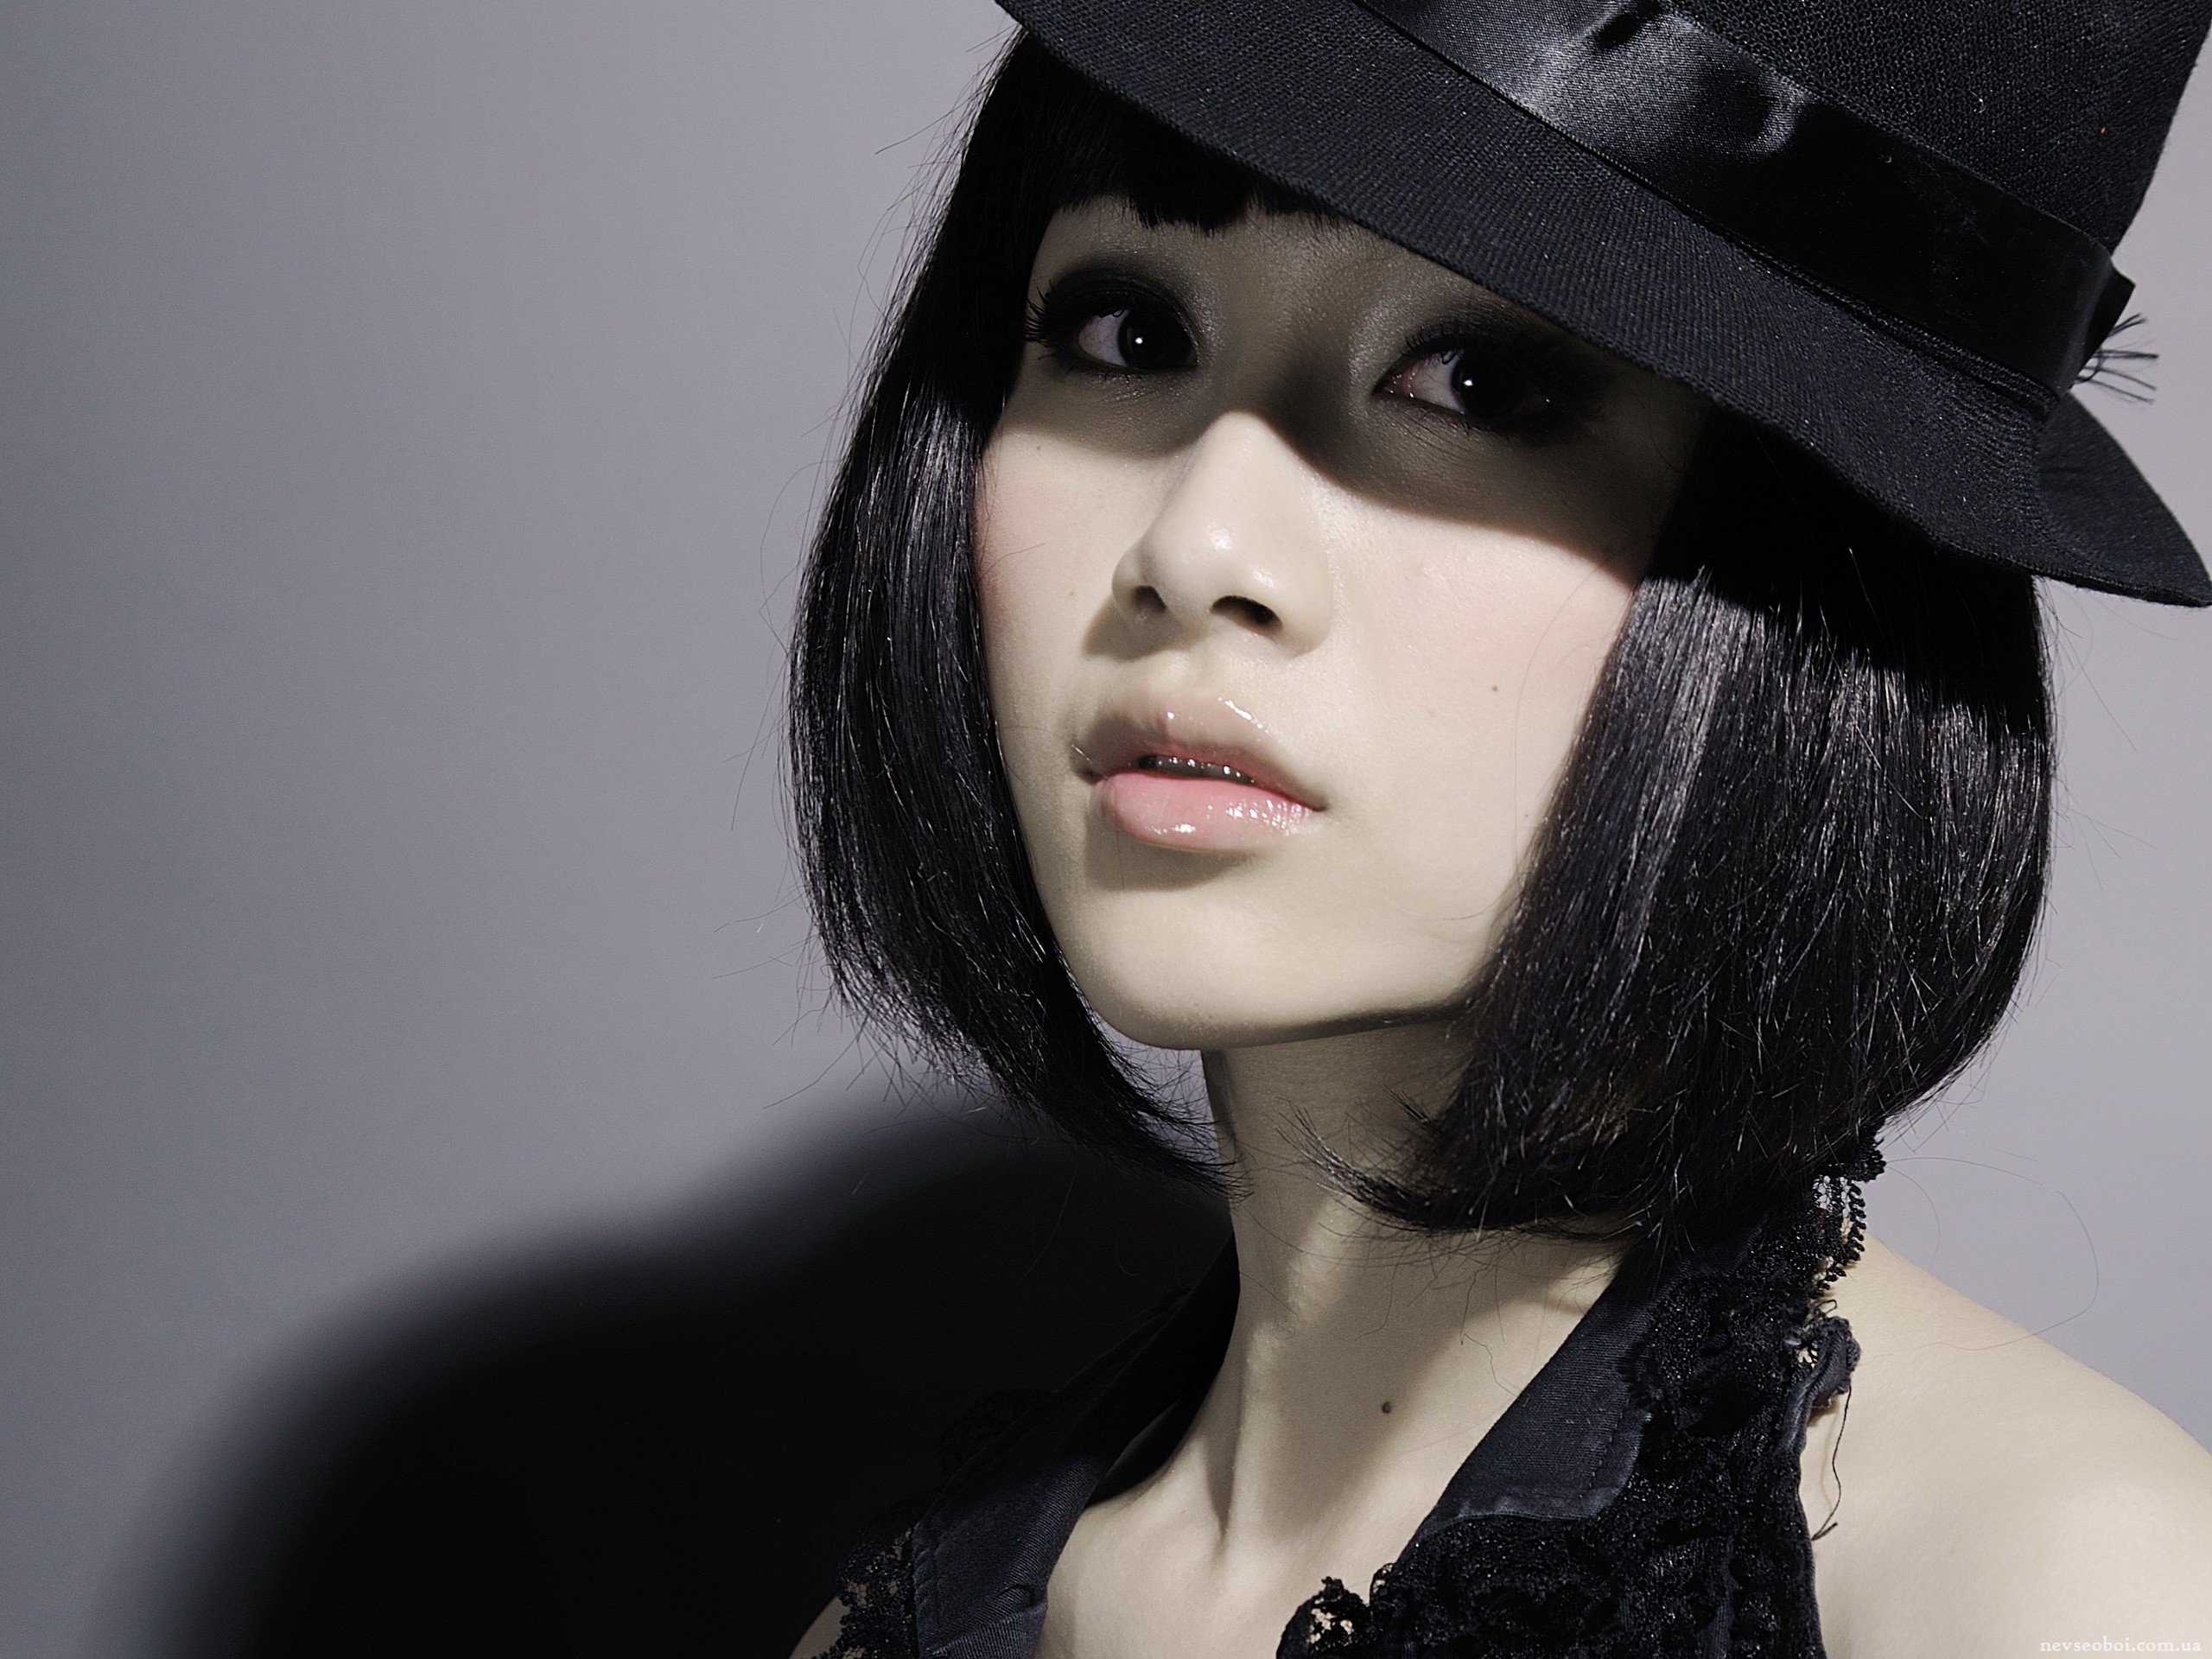 Asian Women Face Black Hair Funny Hats 2560x1920